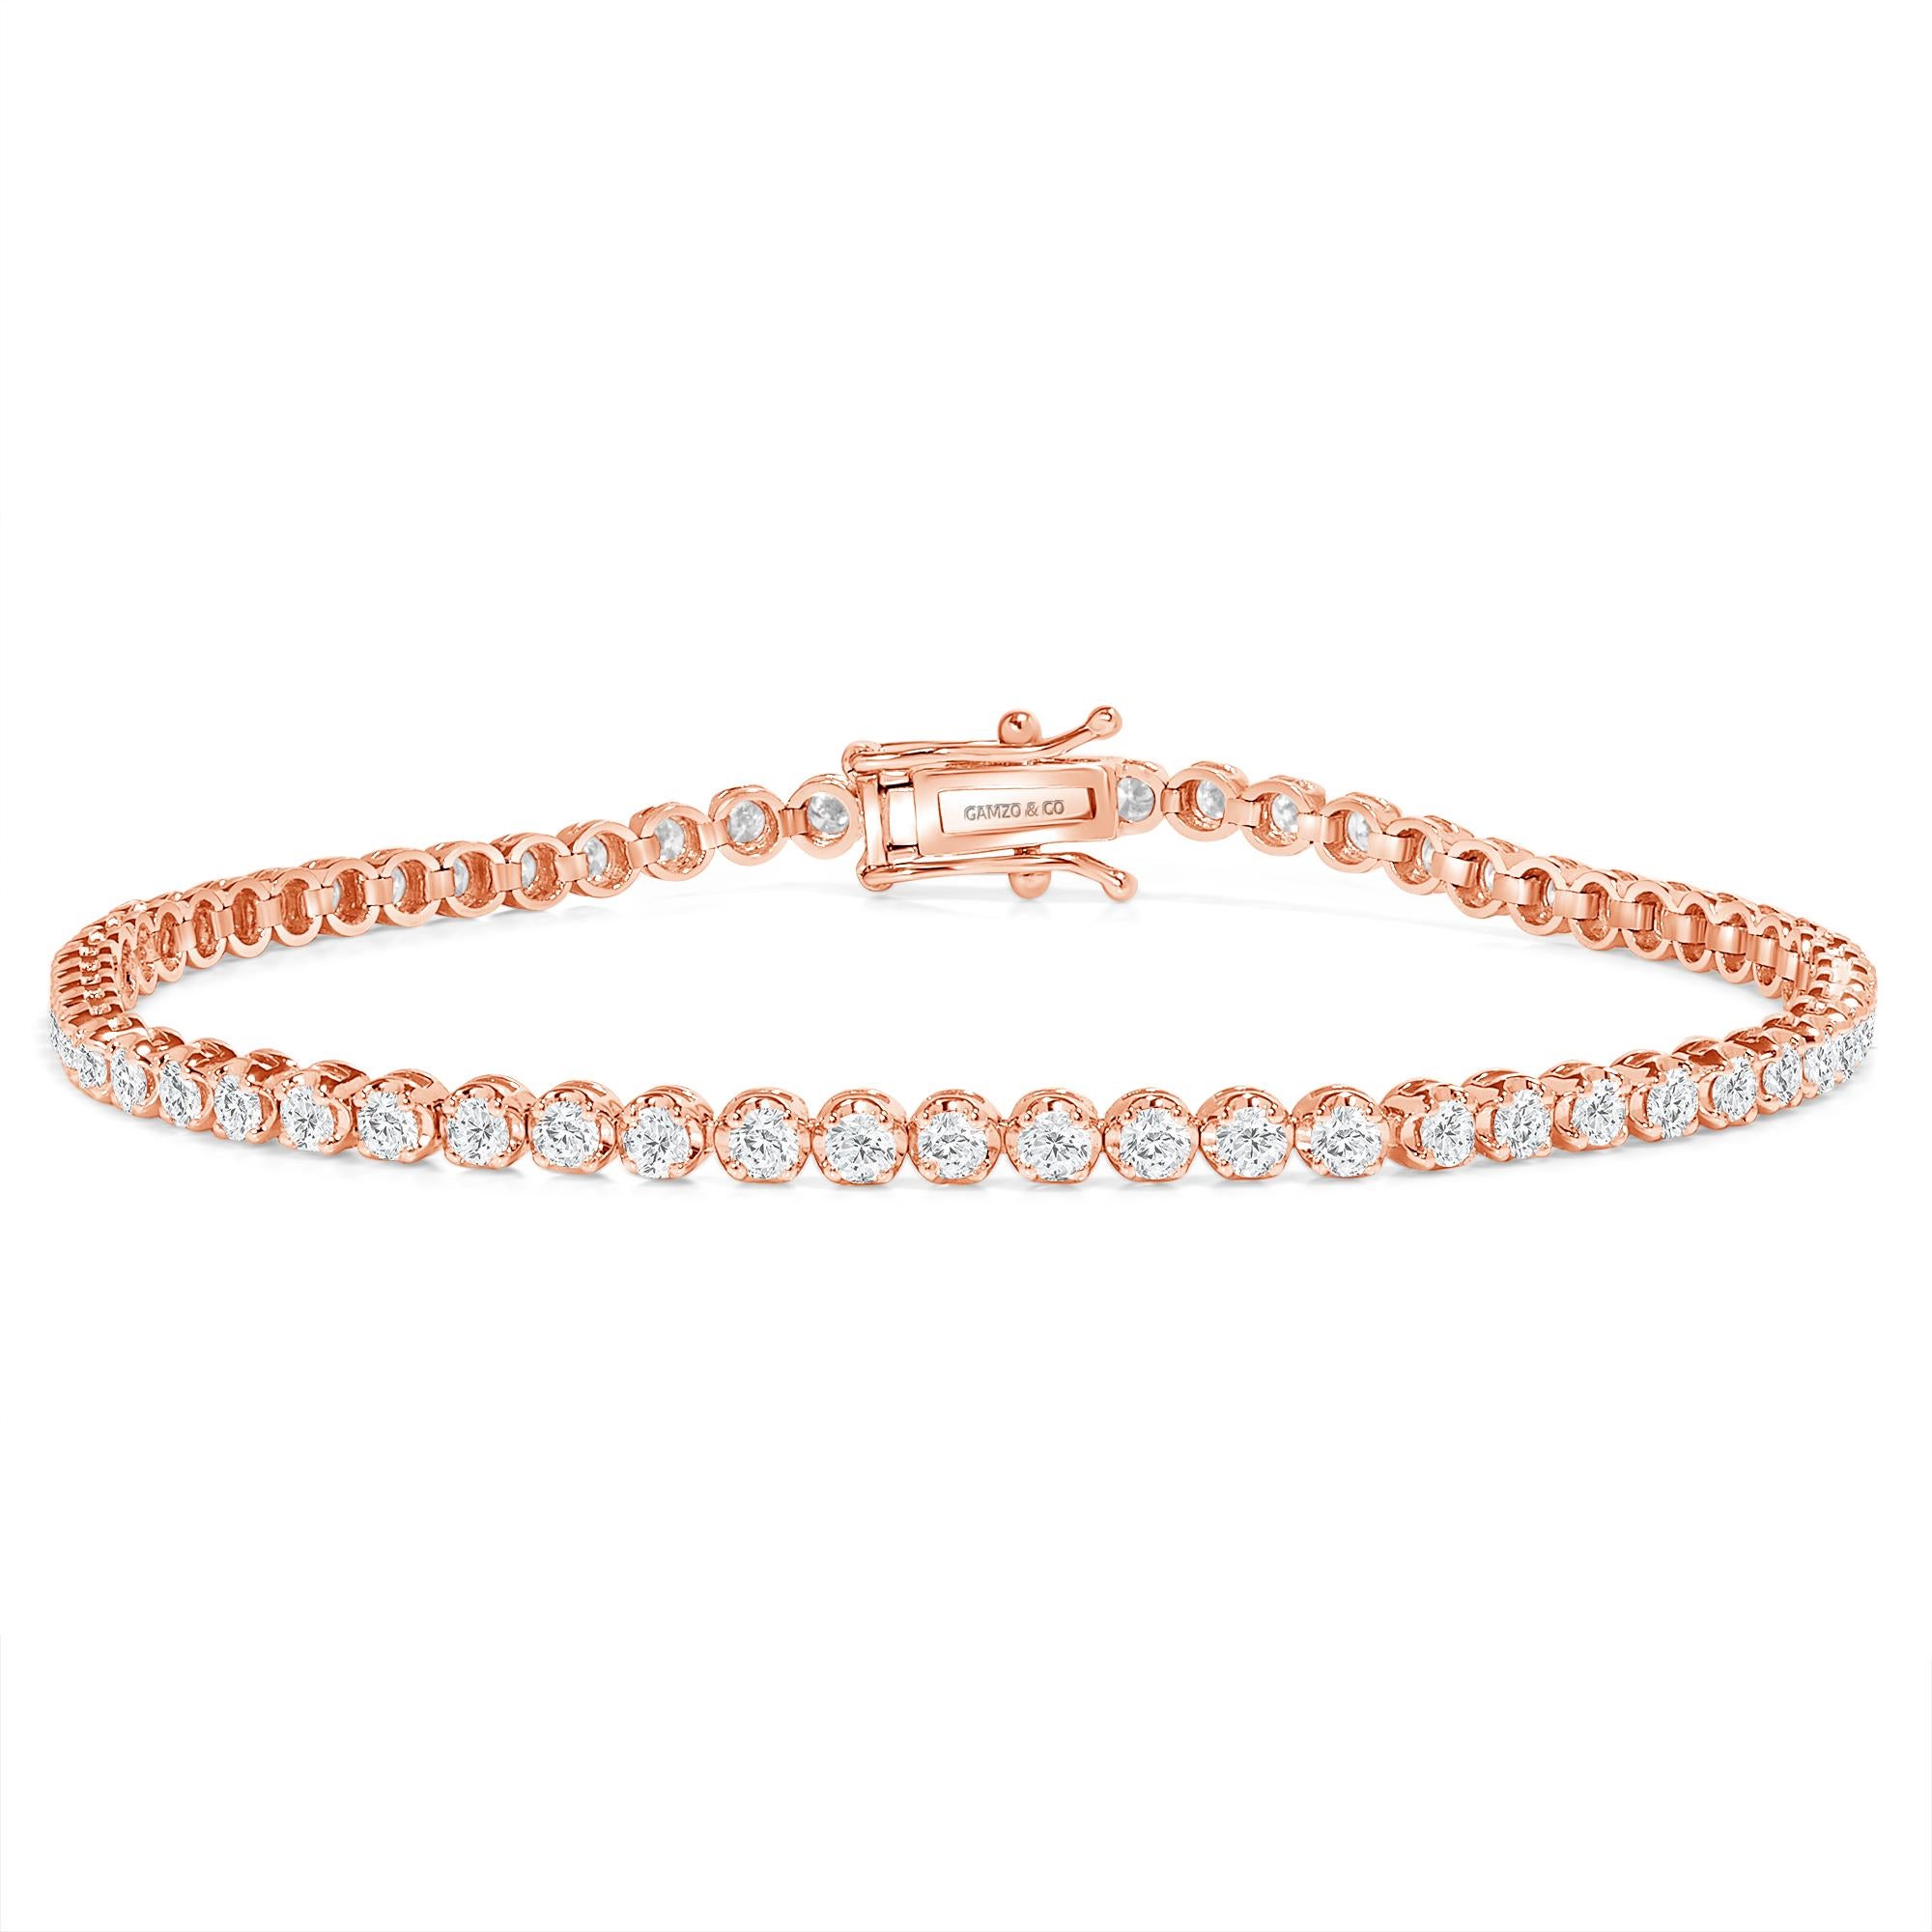 14k rose gold diamond tennis bracelet